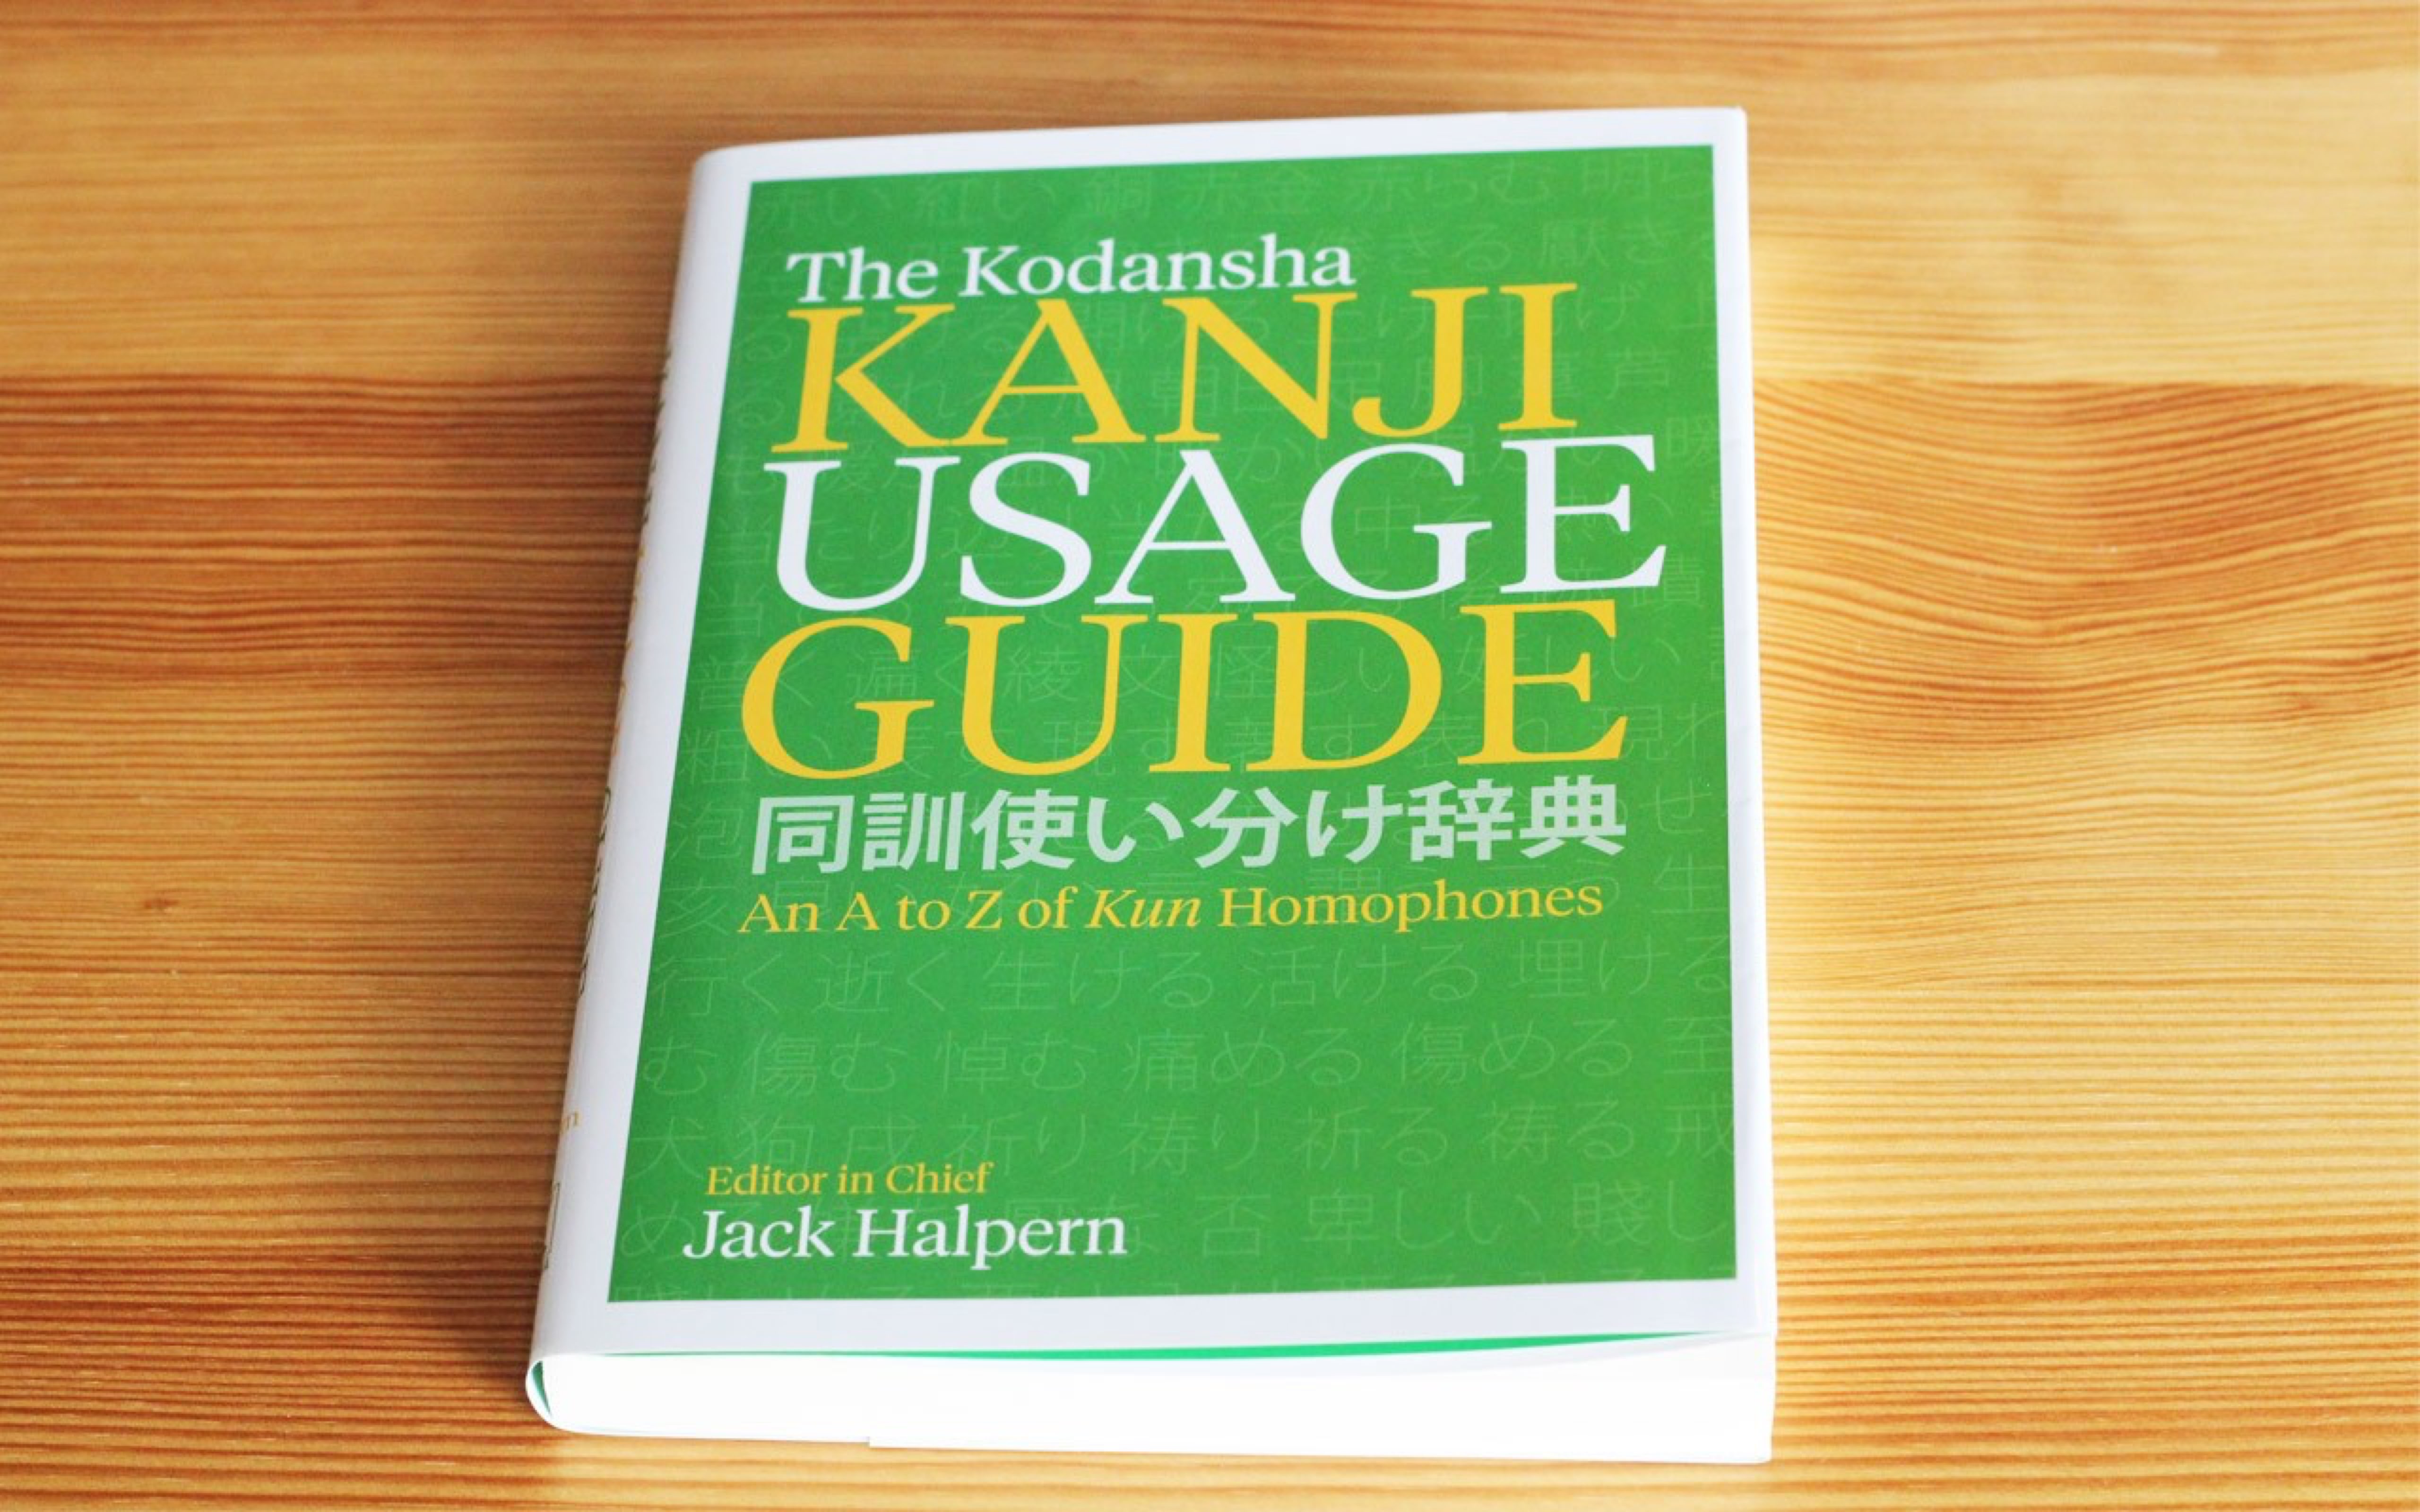 The Kodansha Kanji Usage Guide - The Tofugu Review